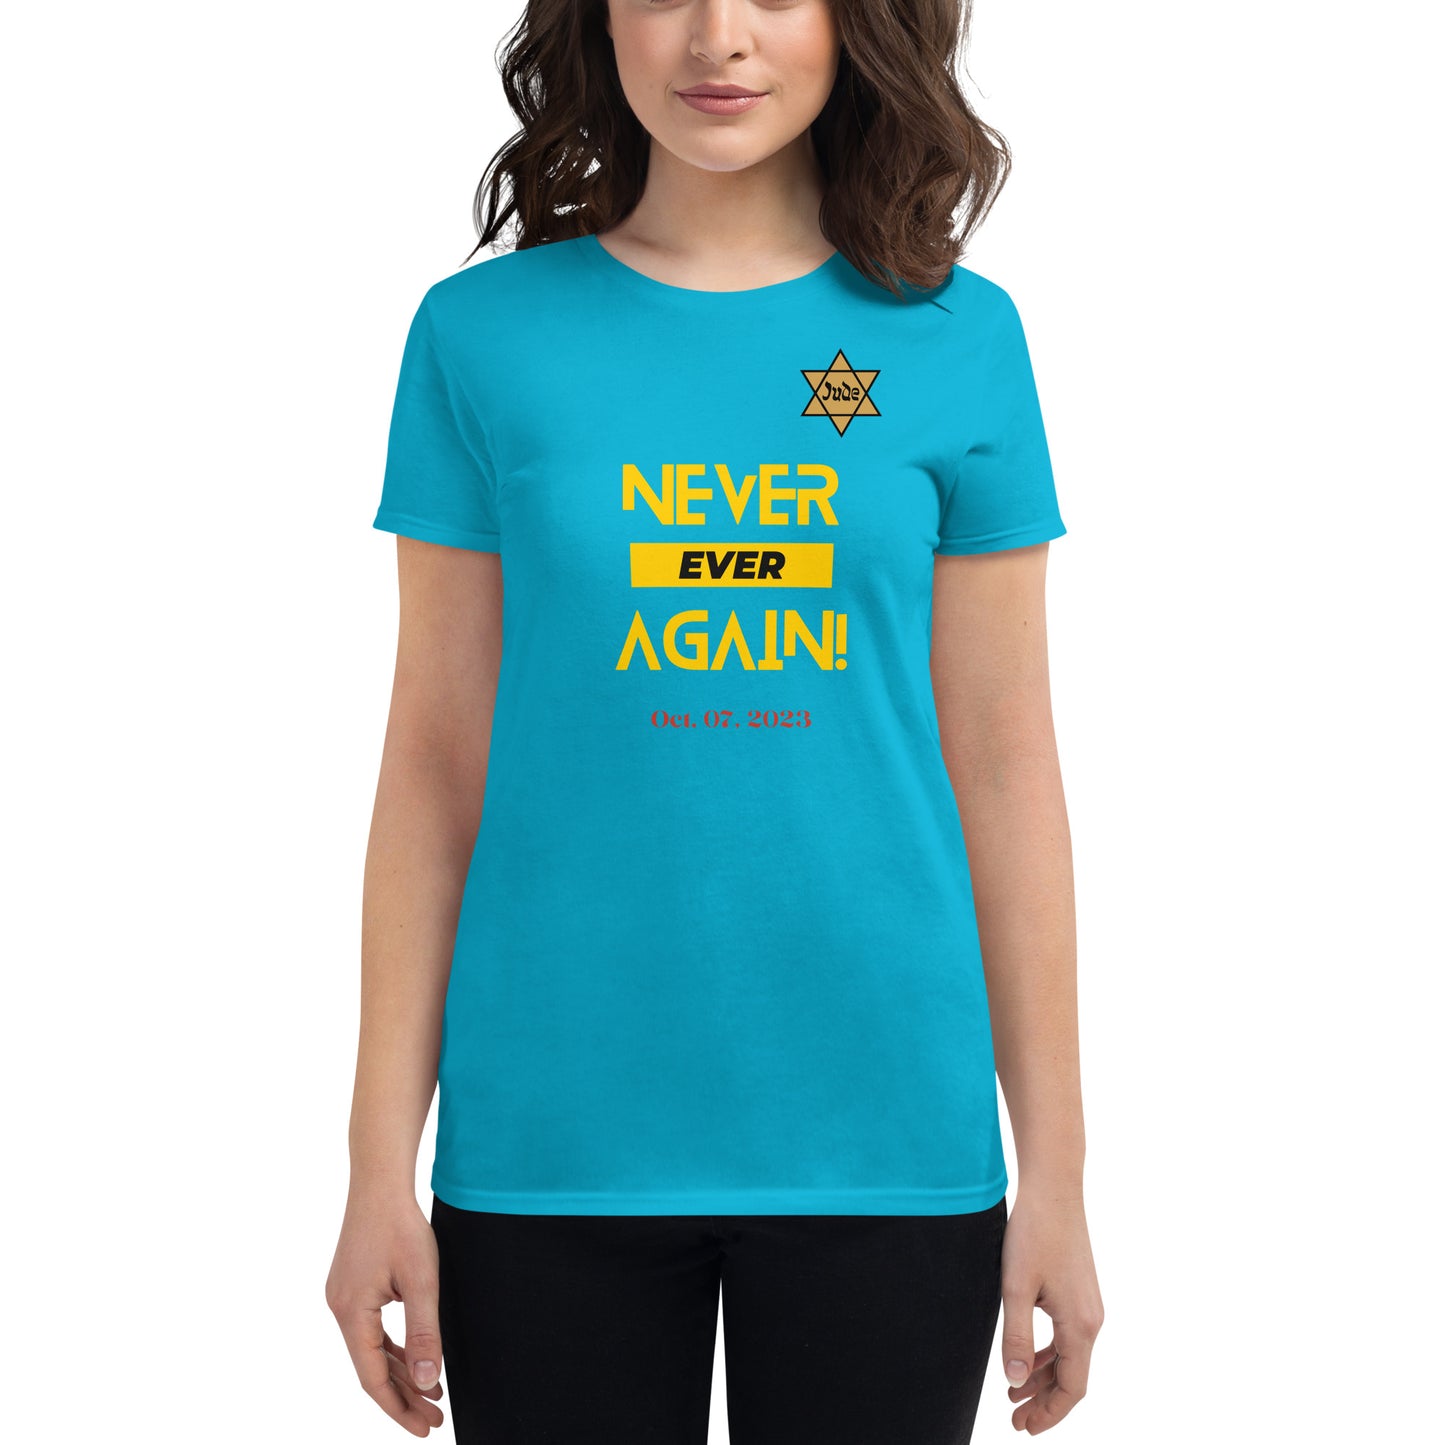 Never Ever Again - Women's short sleeve t-shirt (5 colors)